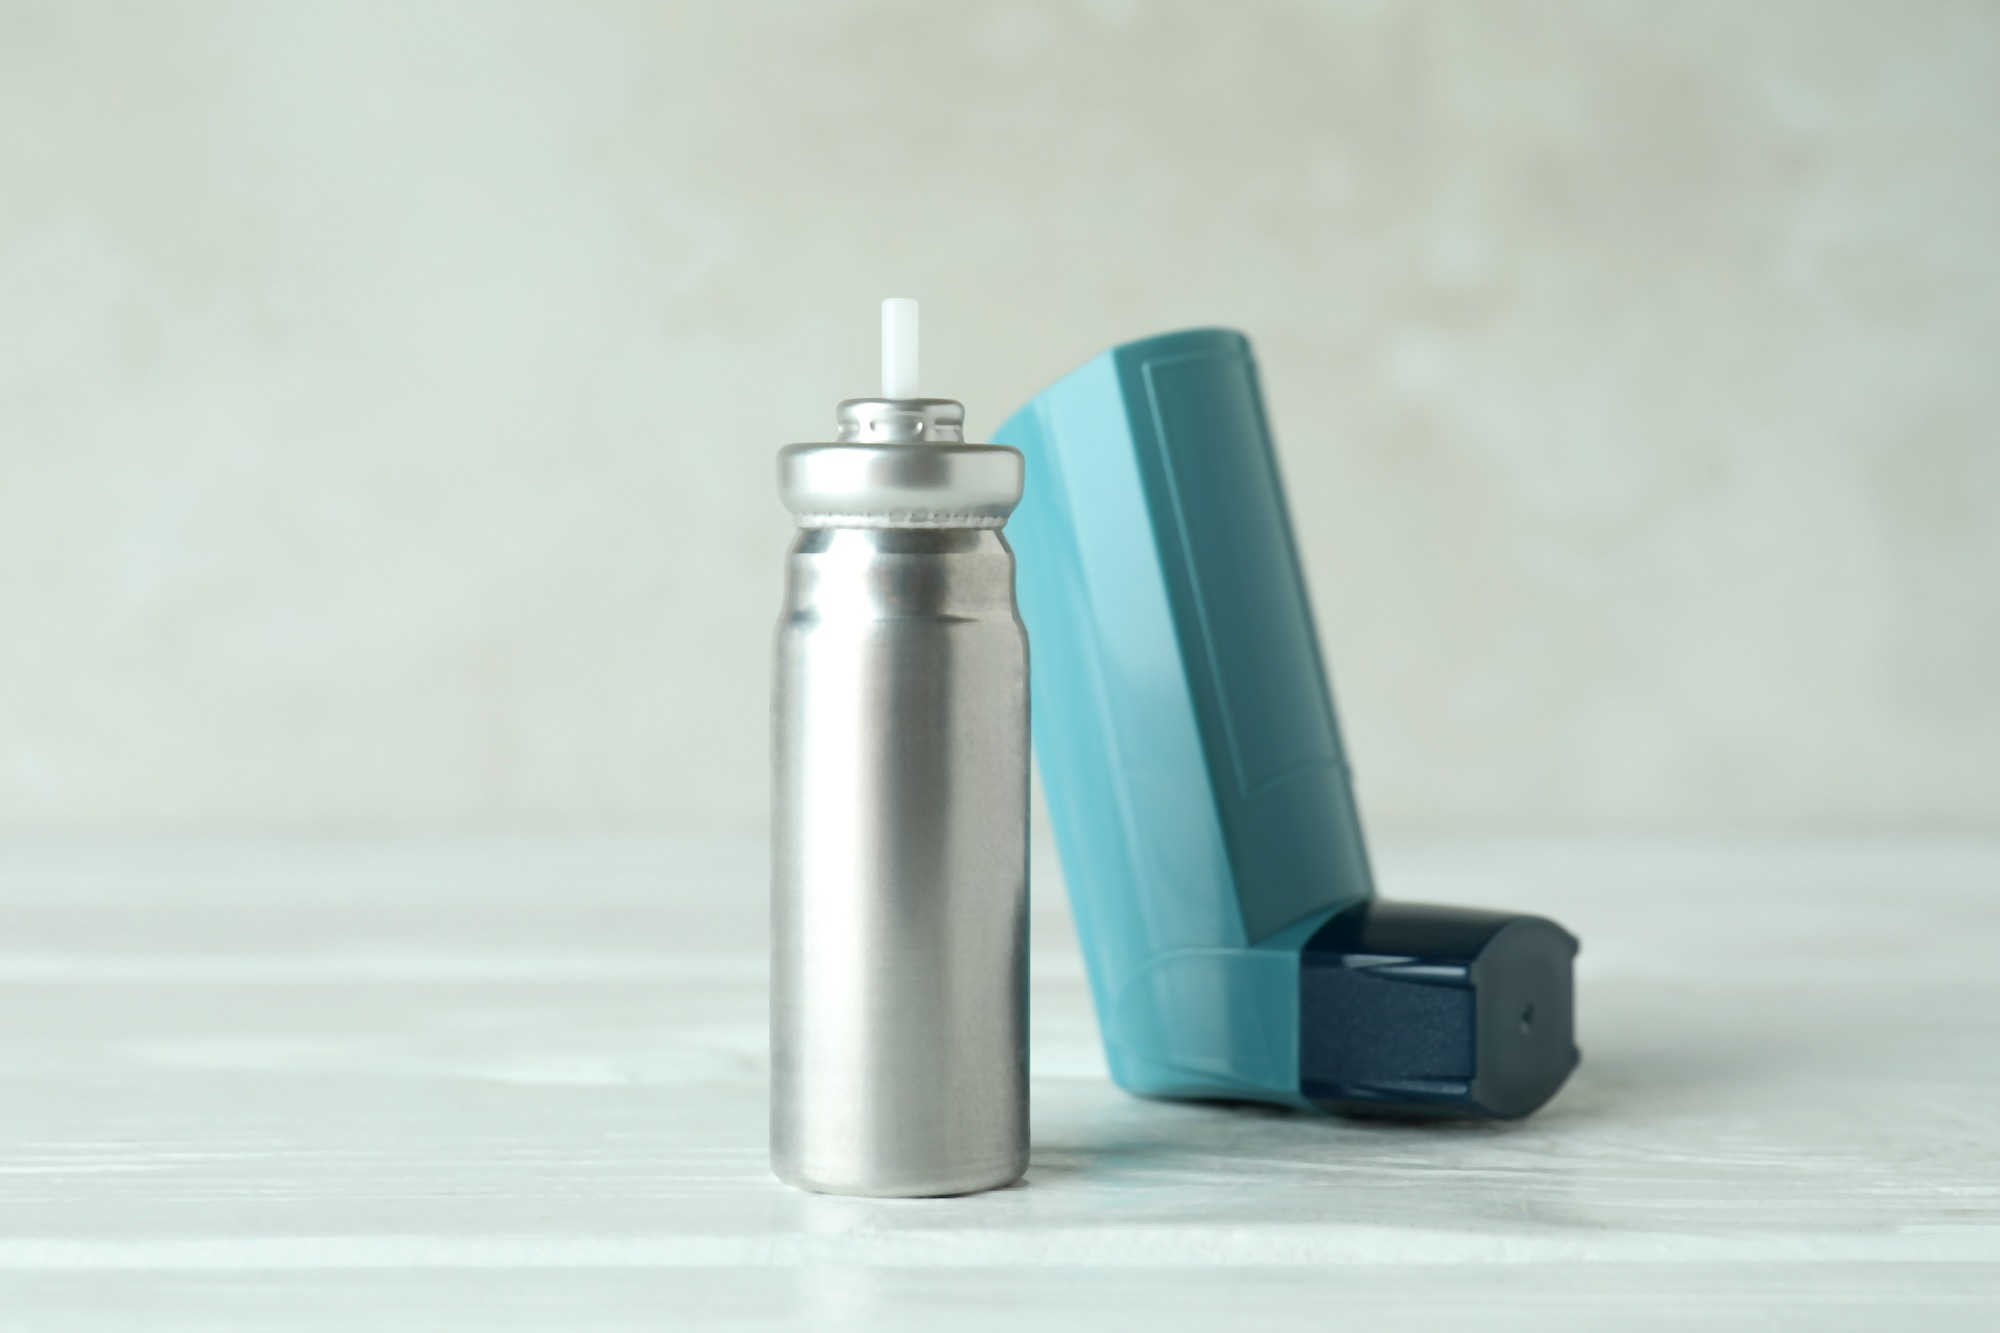 blue asthma inhaler on white wooden table 2021 09 04 10 32 16 utc